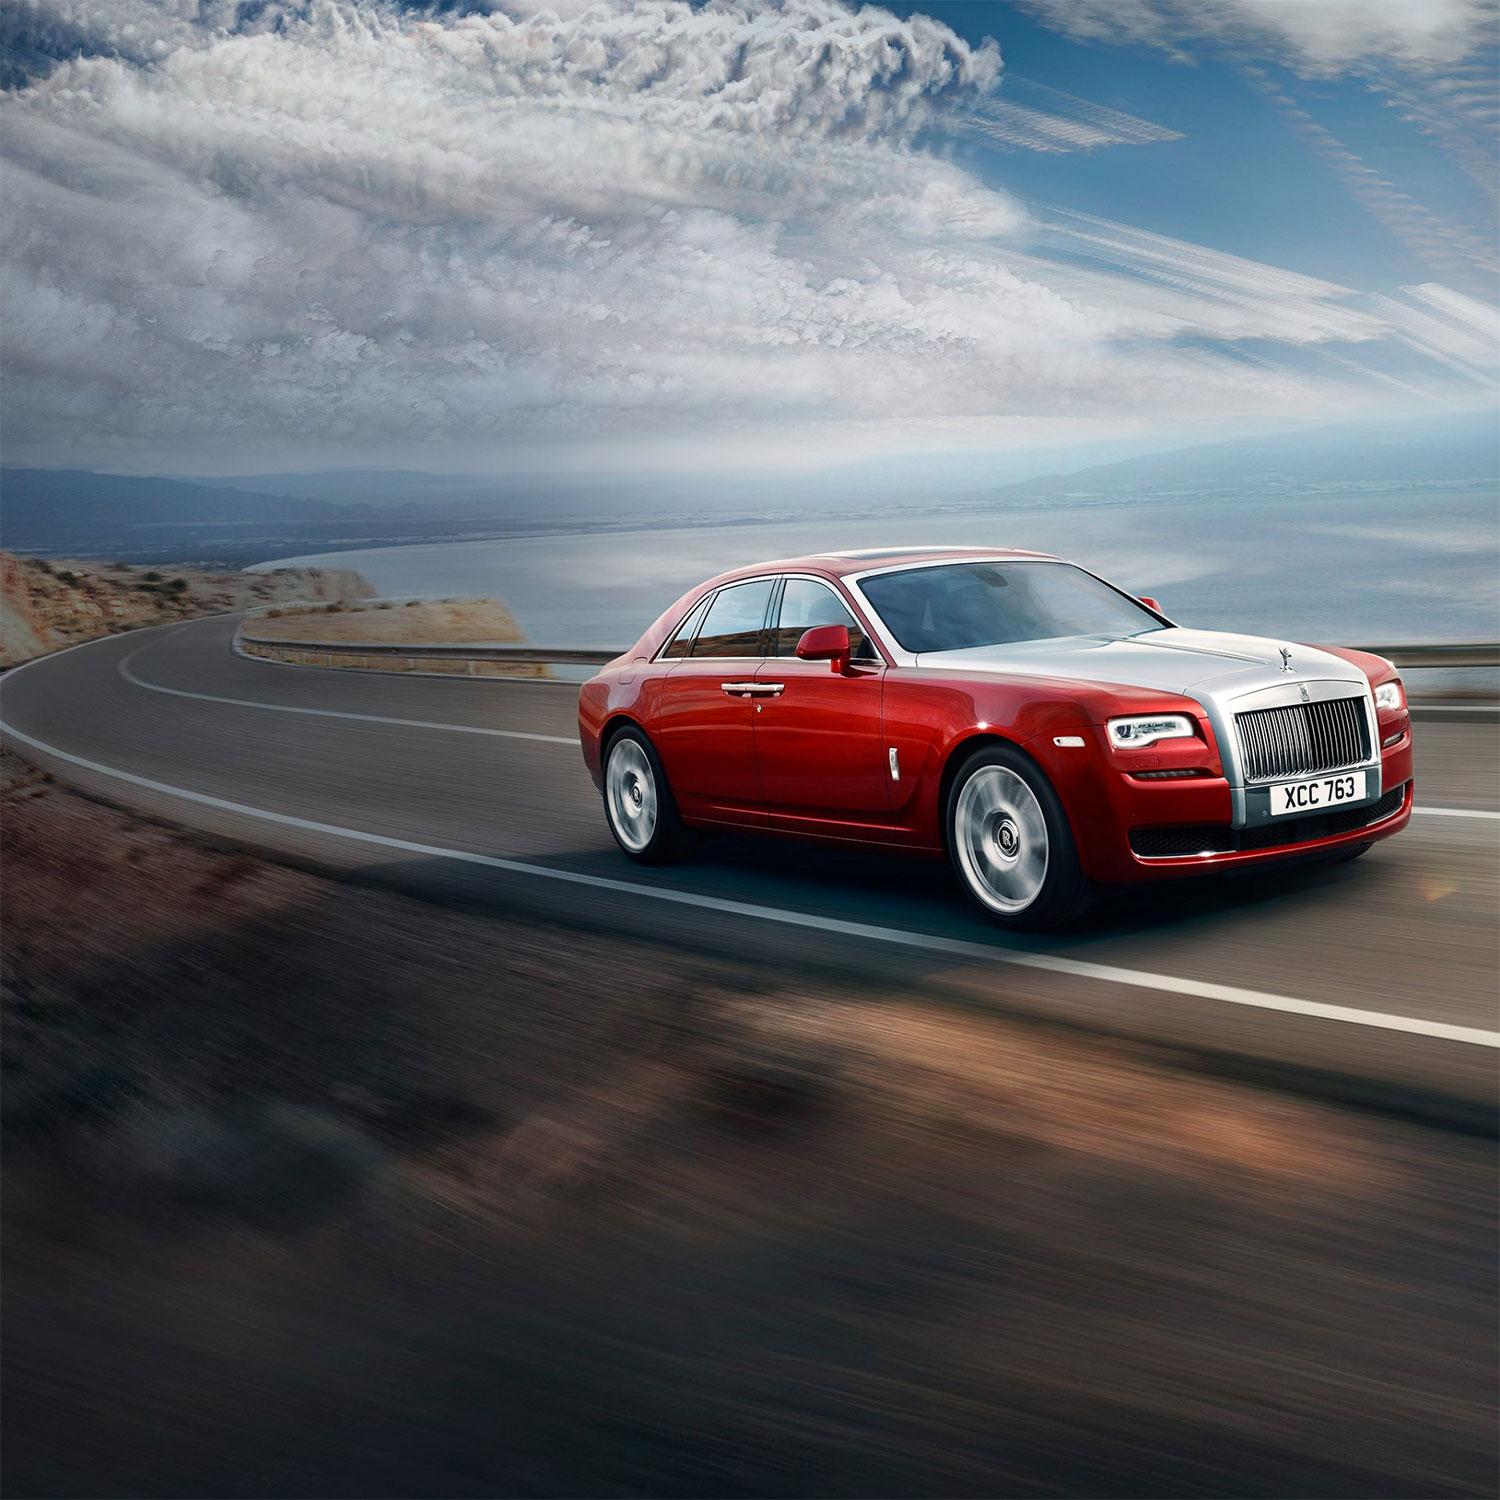 En bil av modellen Ghost återkallade Rolls Royce.